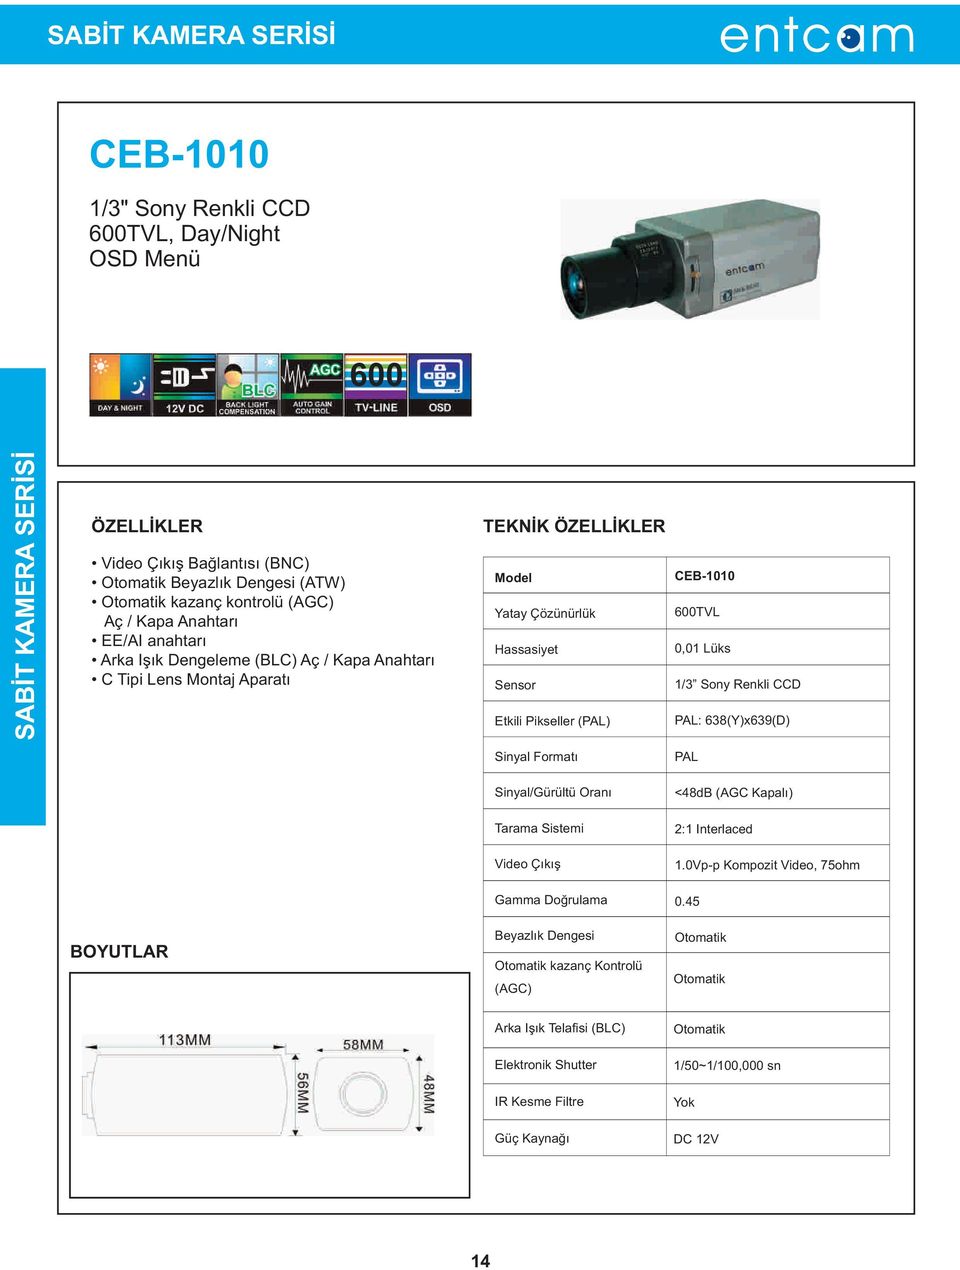 Pikseller (PAL) CEB-1010 600TVL 0,01 Lüks 1/3 Sony Renkli CCD PAL: 638(Y)x639(D) Sinyal Formatý PAL Sinyal/Gürültü Oraný <48dB (AGC Kapalý) Tarama Sistemi 2:1 Interlaced Video Çýkýþ 1.